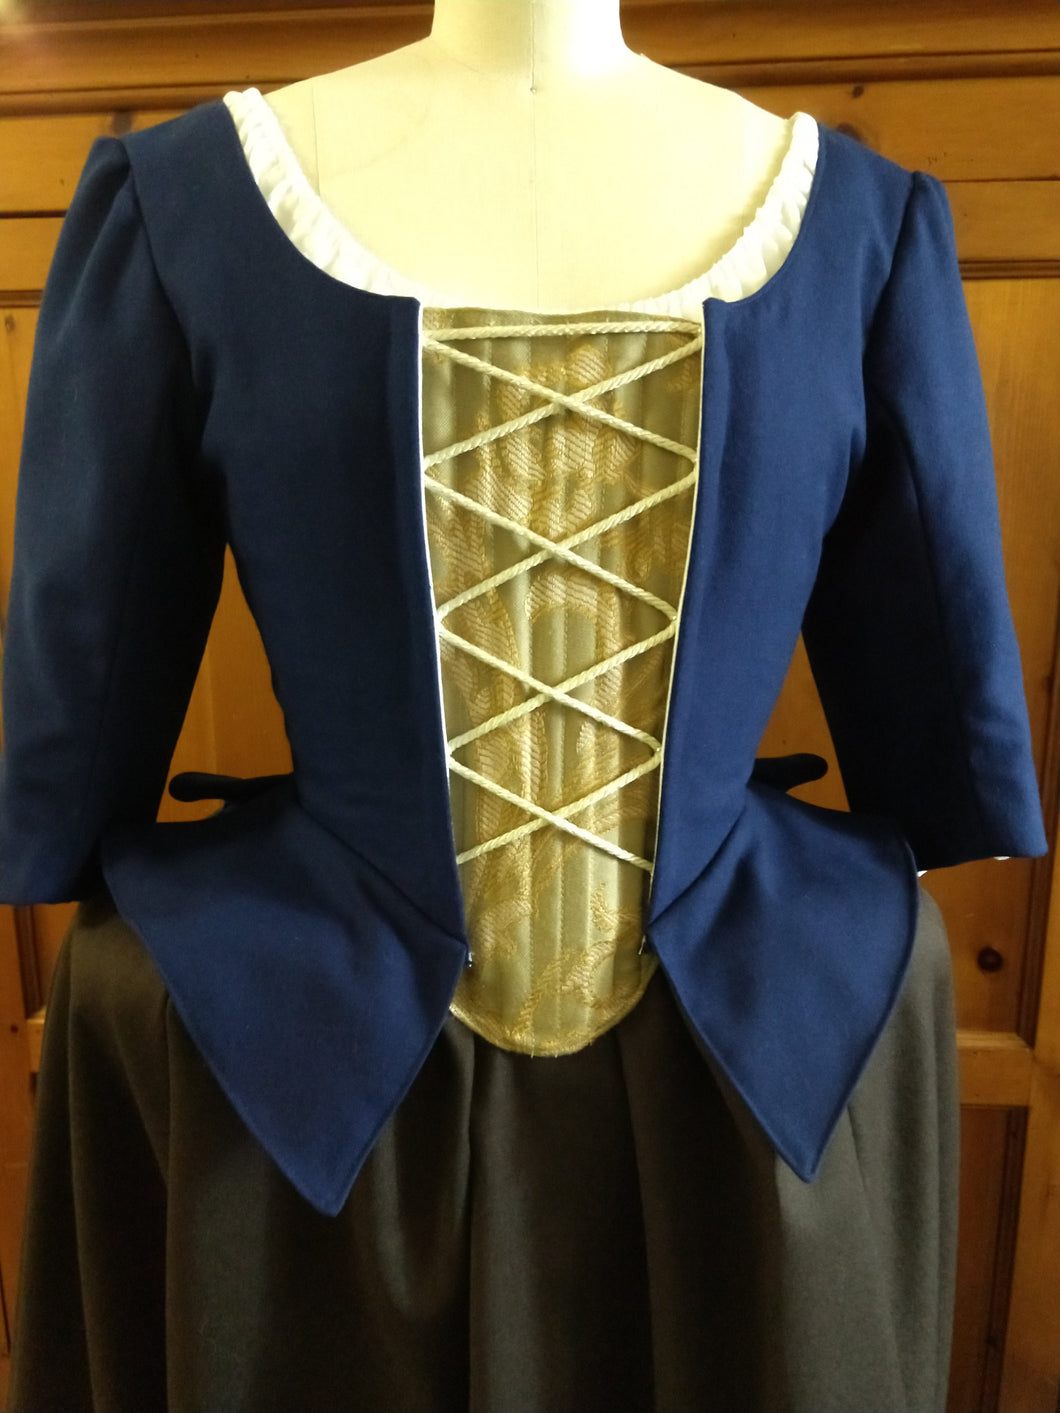 Outlander / Claire Fraser / Scottish / 18th century dress